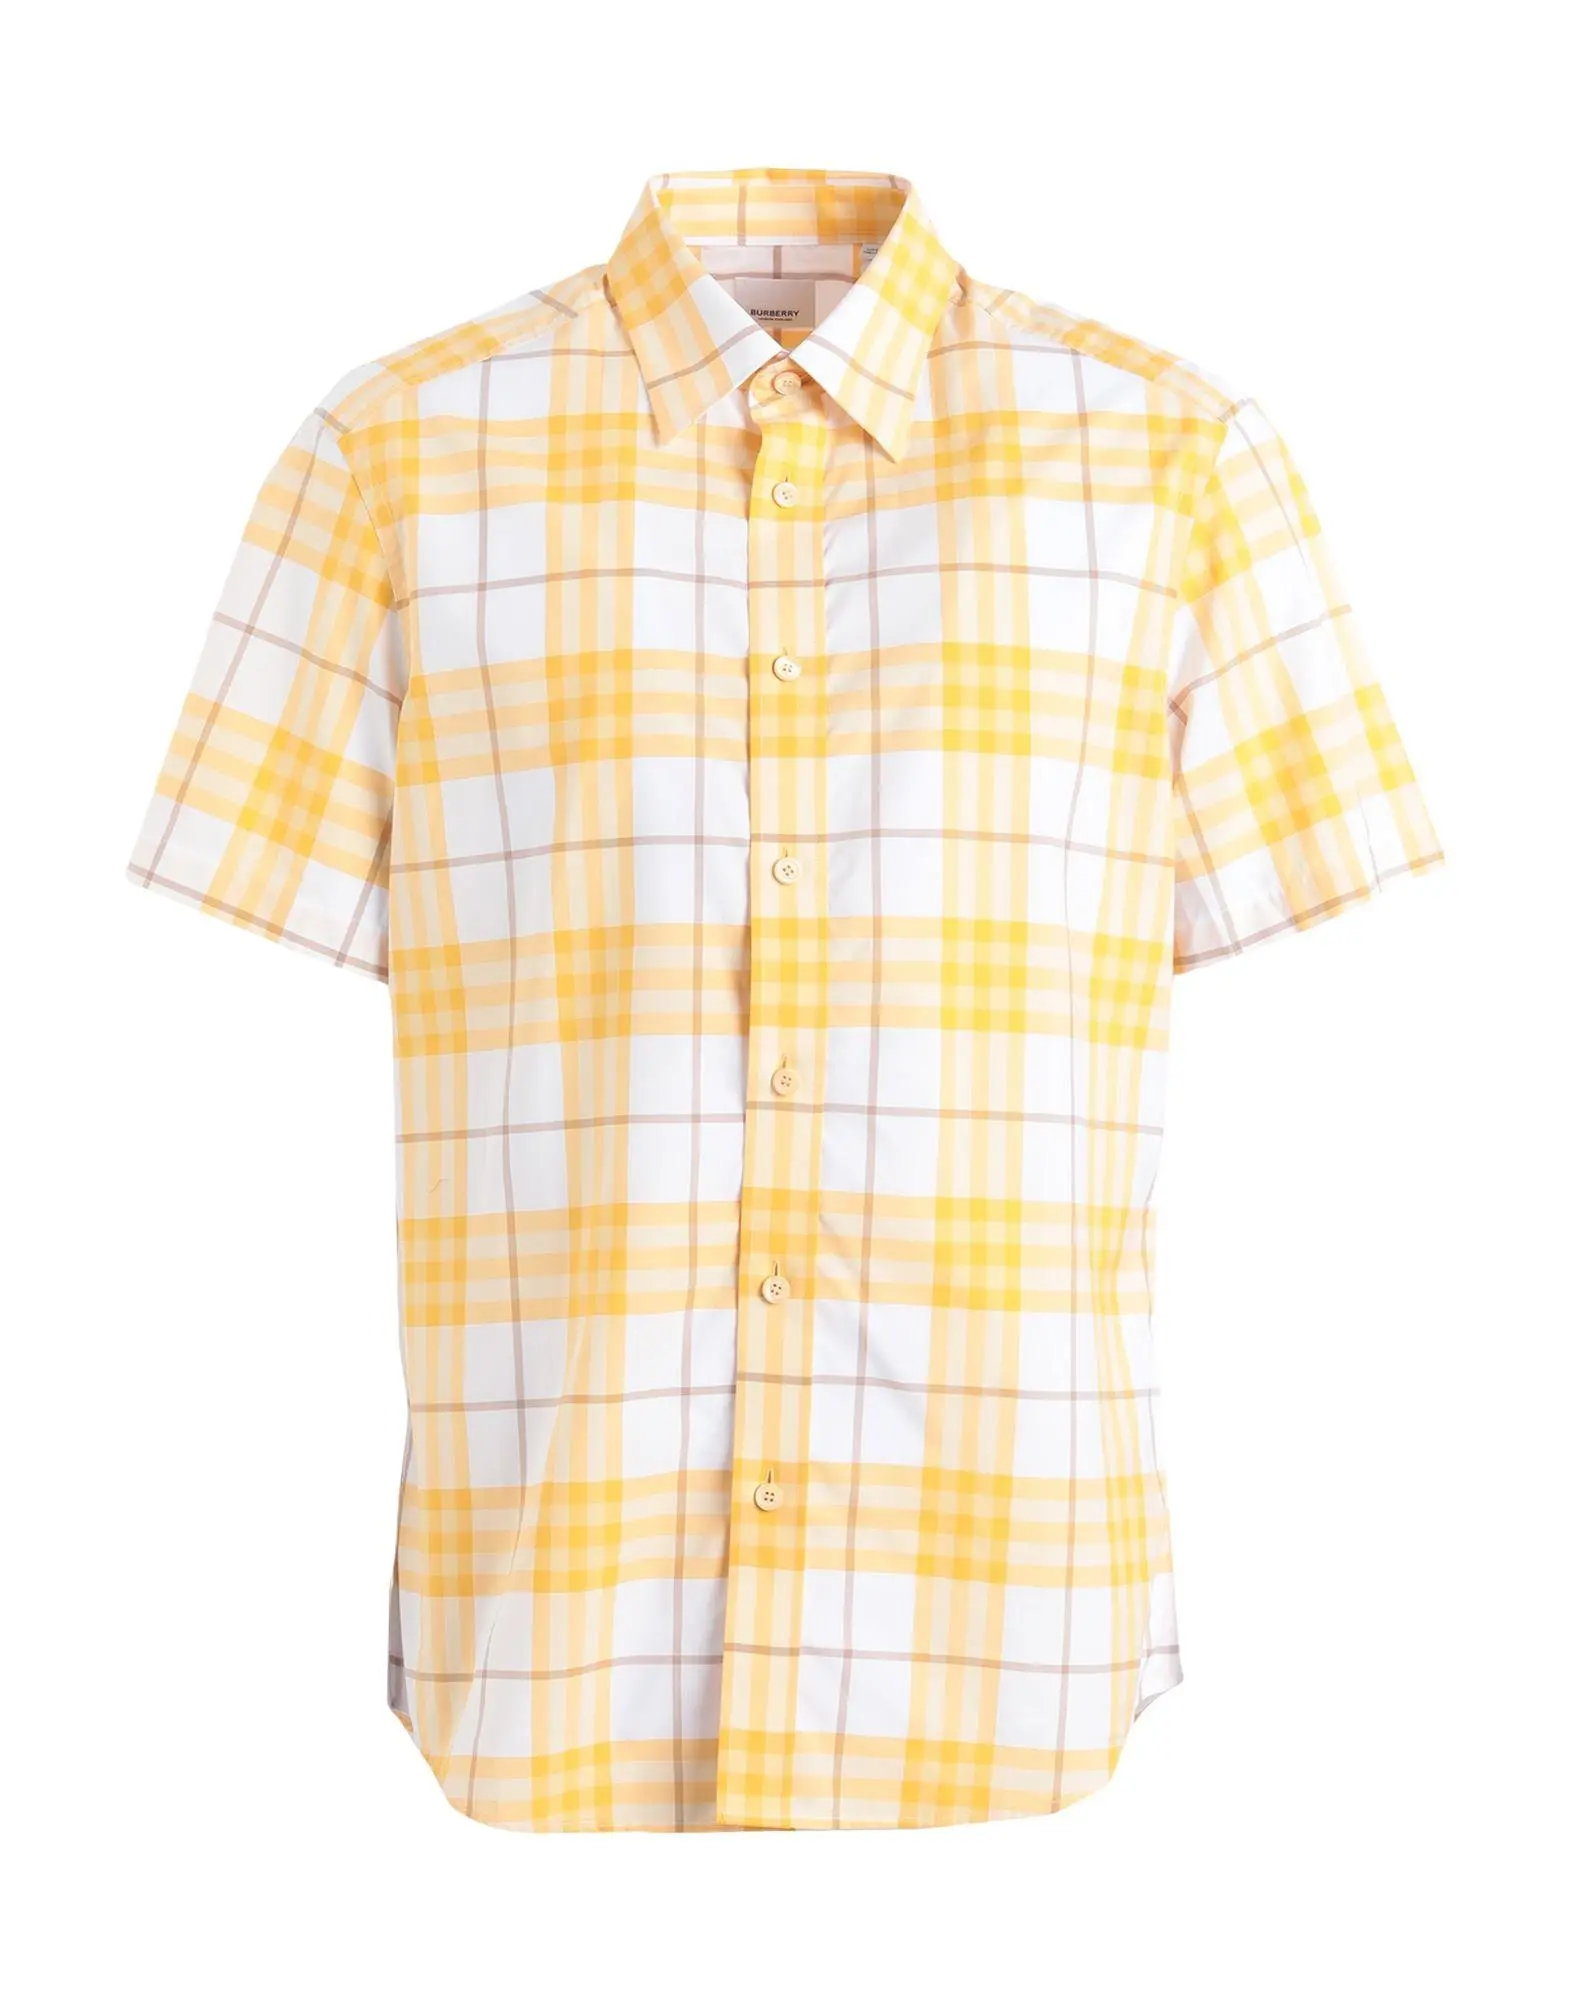 Burberry Yellow amp; Gray Check Shirt